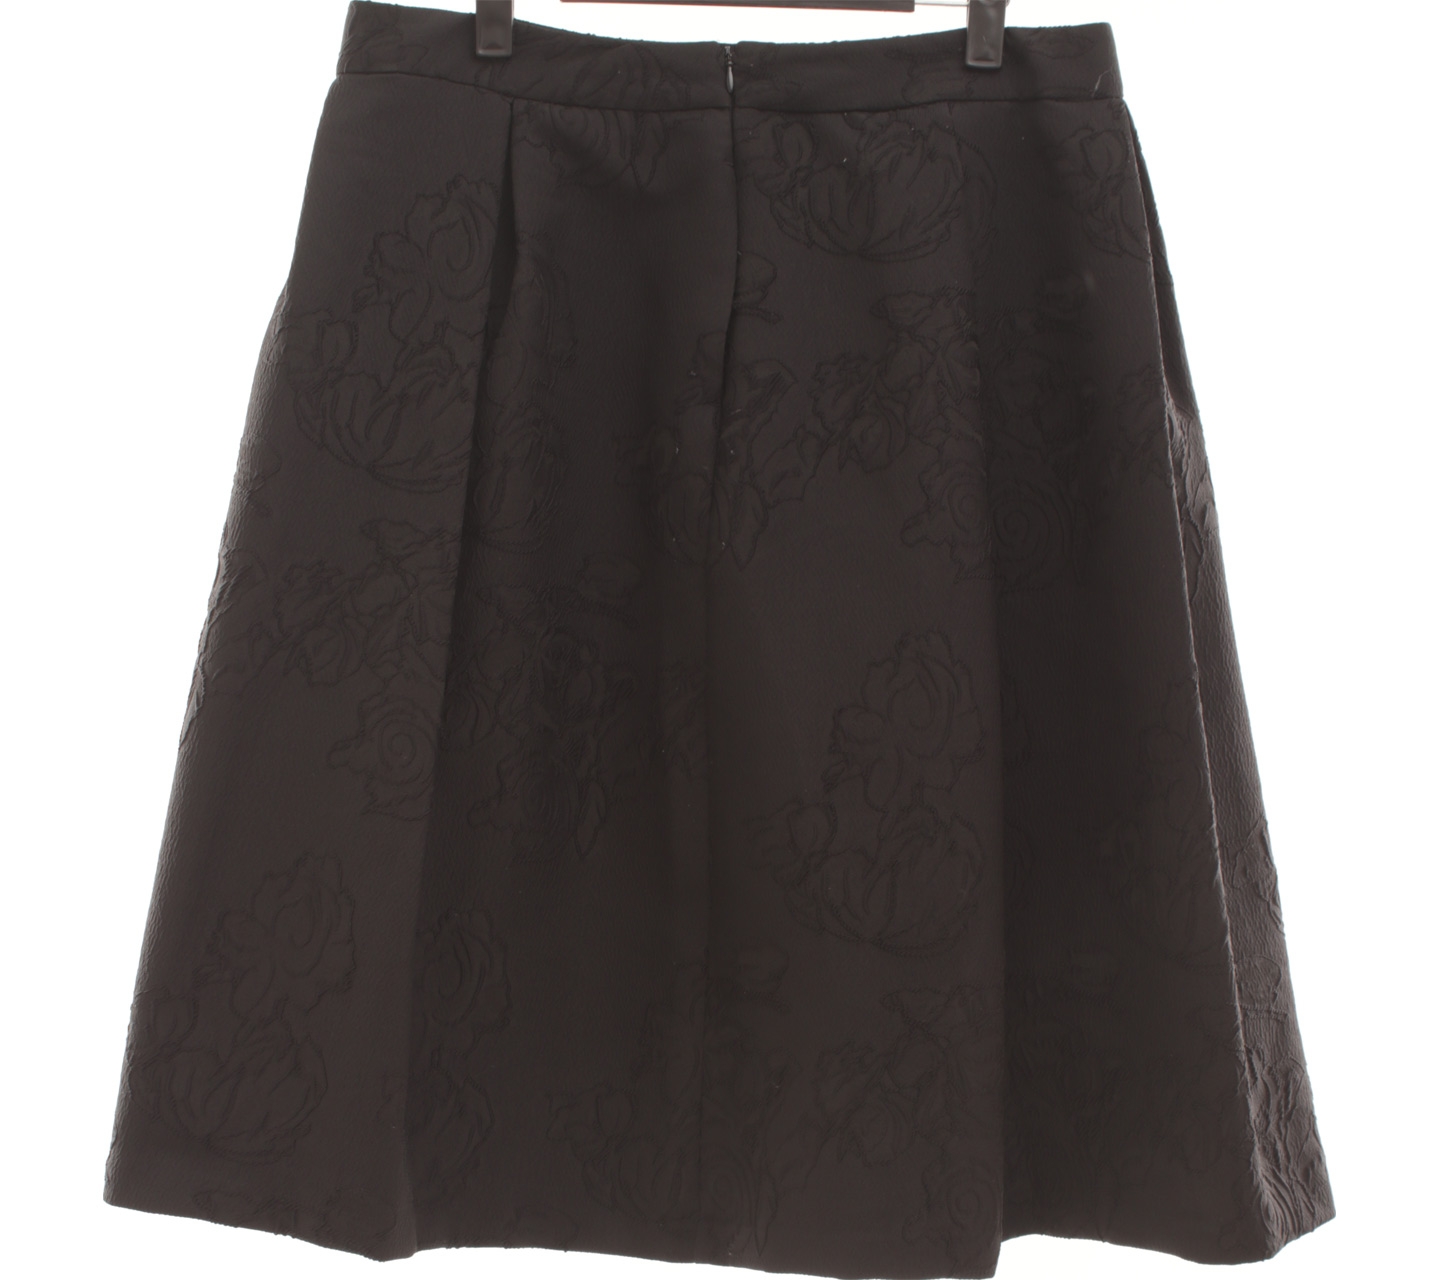 Autograph Marks & Spencer Patterned Lace Black Midi Skirt